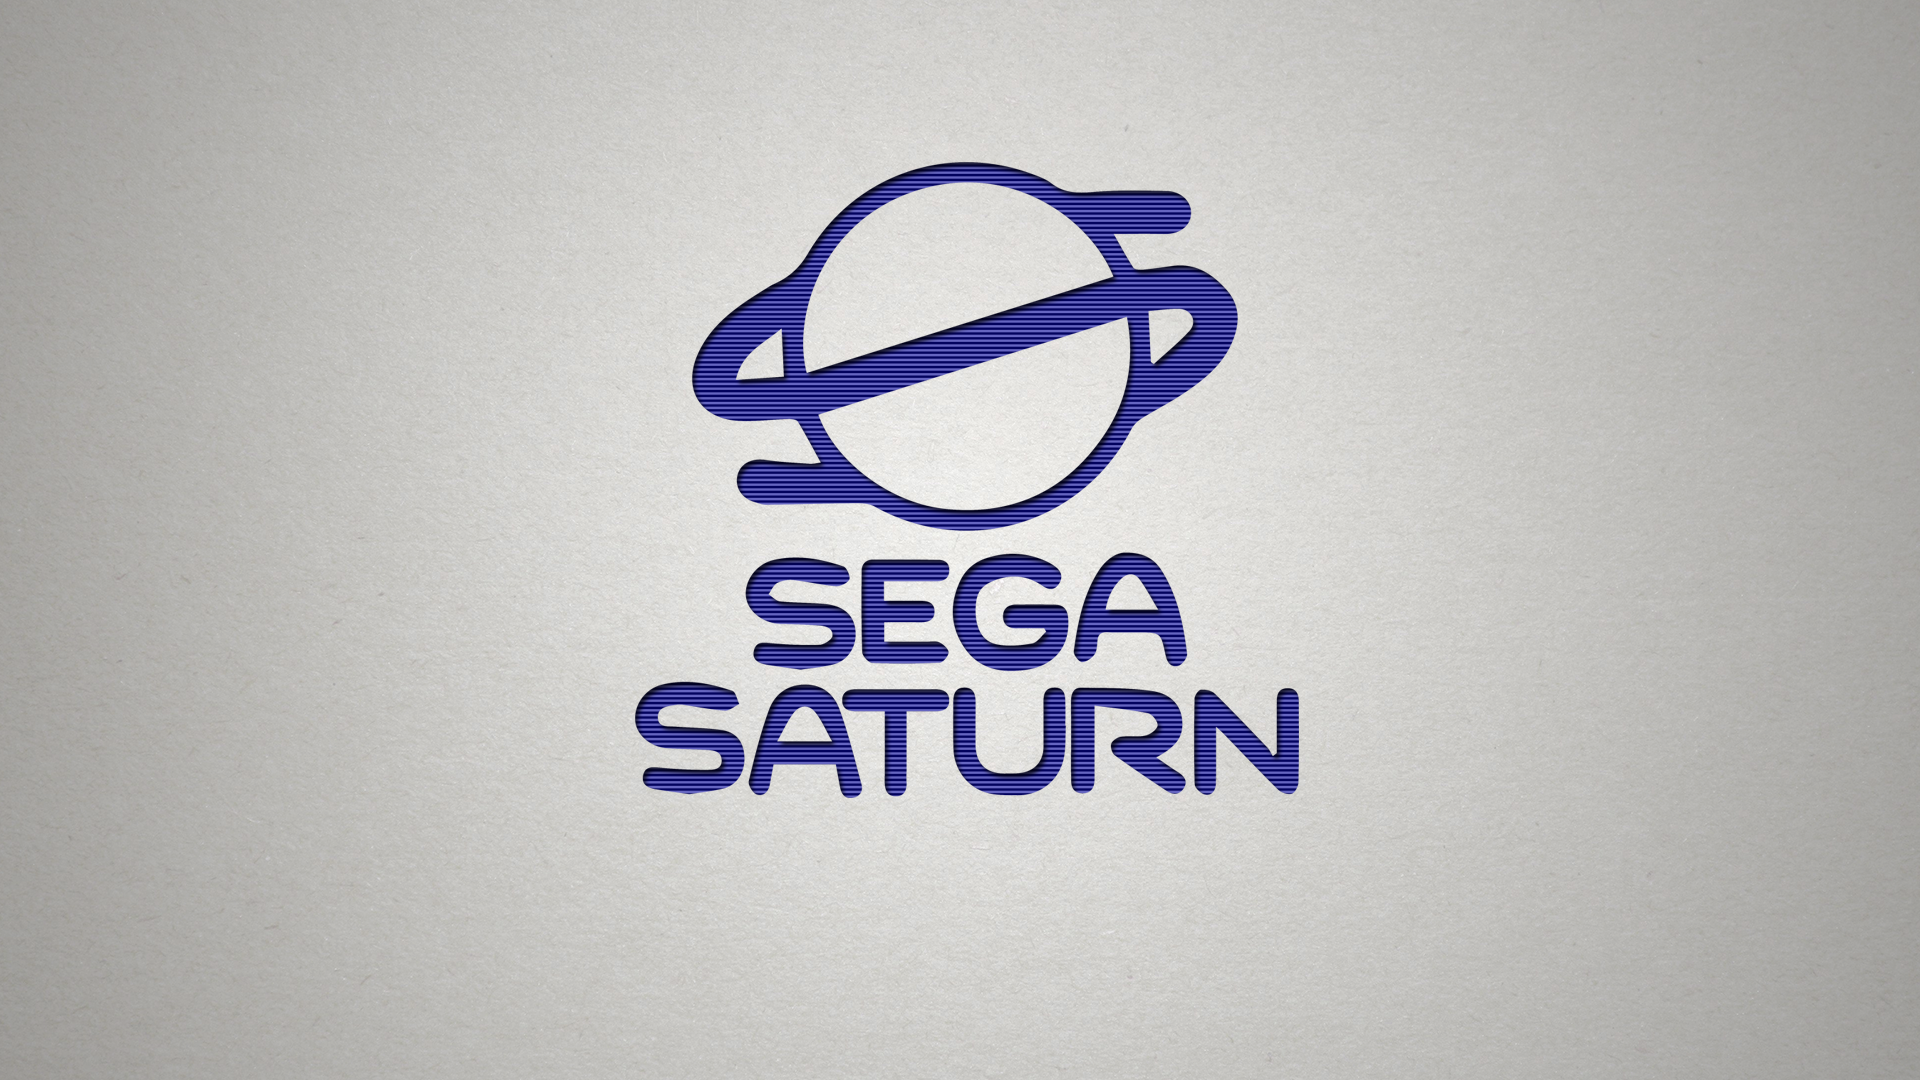 Sega Saturn Puter Wallpaper Desktop Background